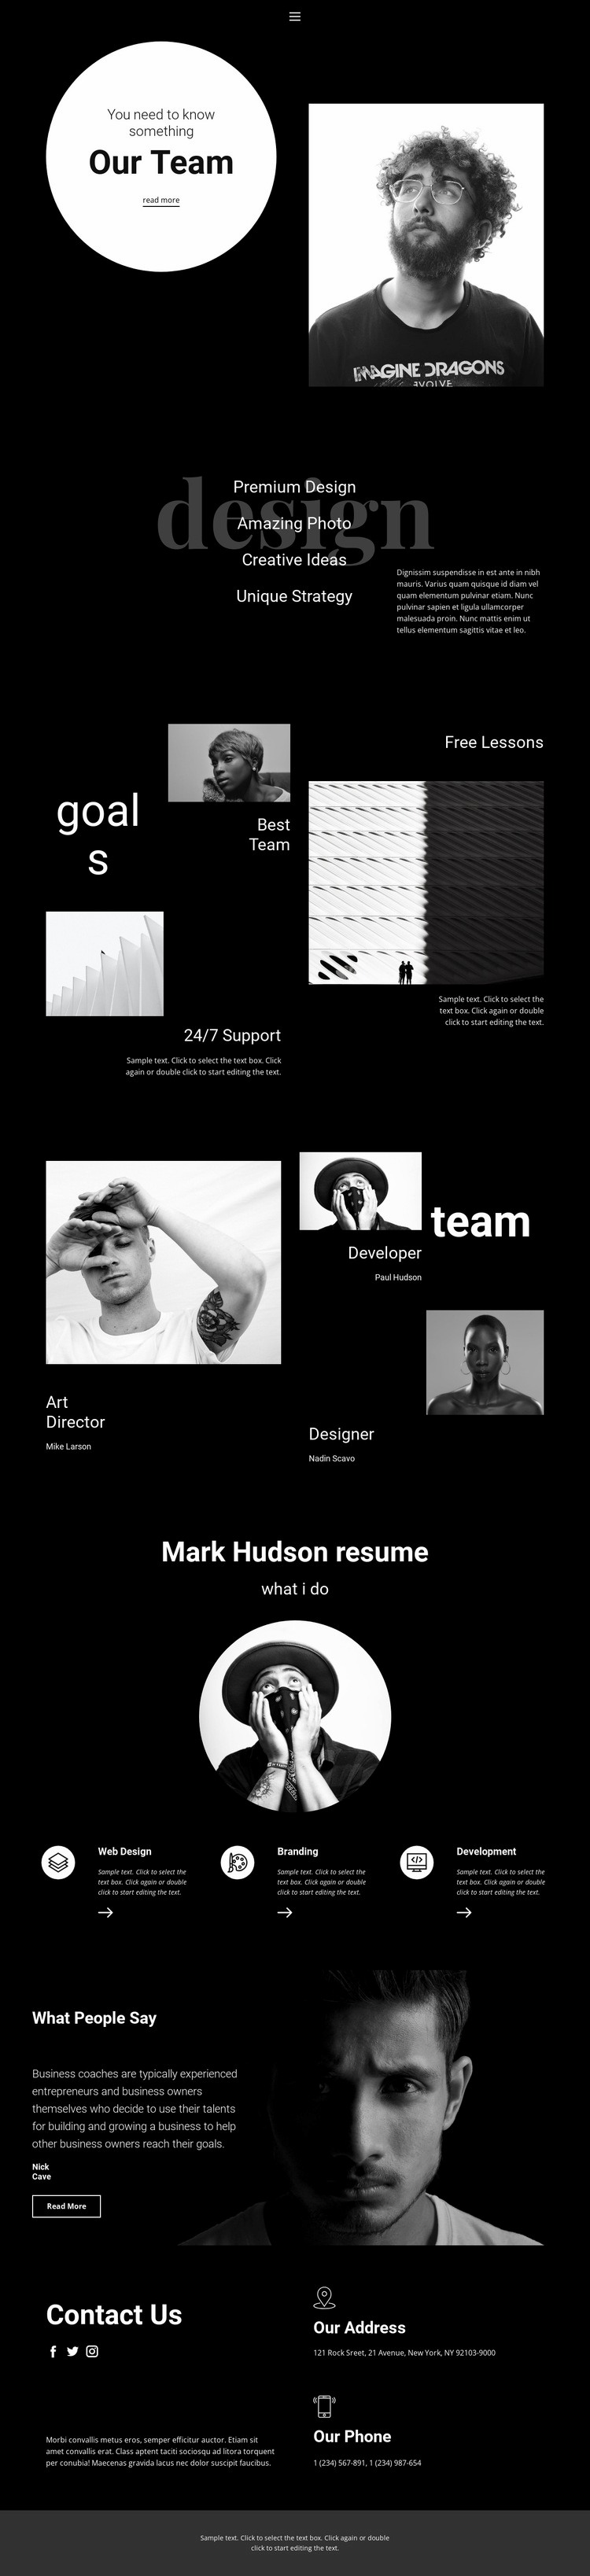 Design and development team Homepage Design